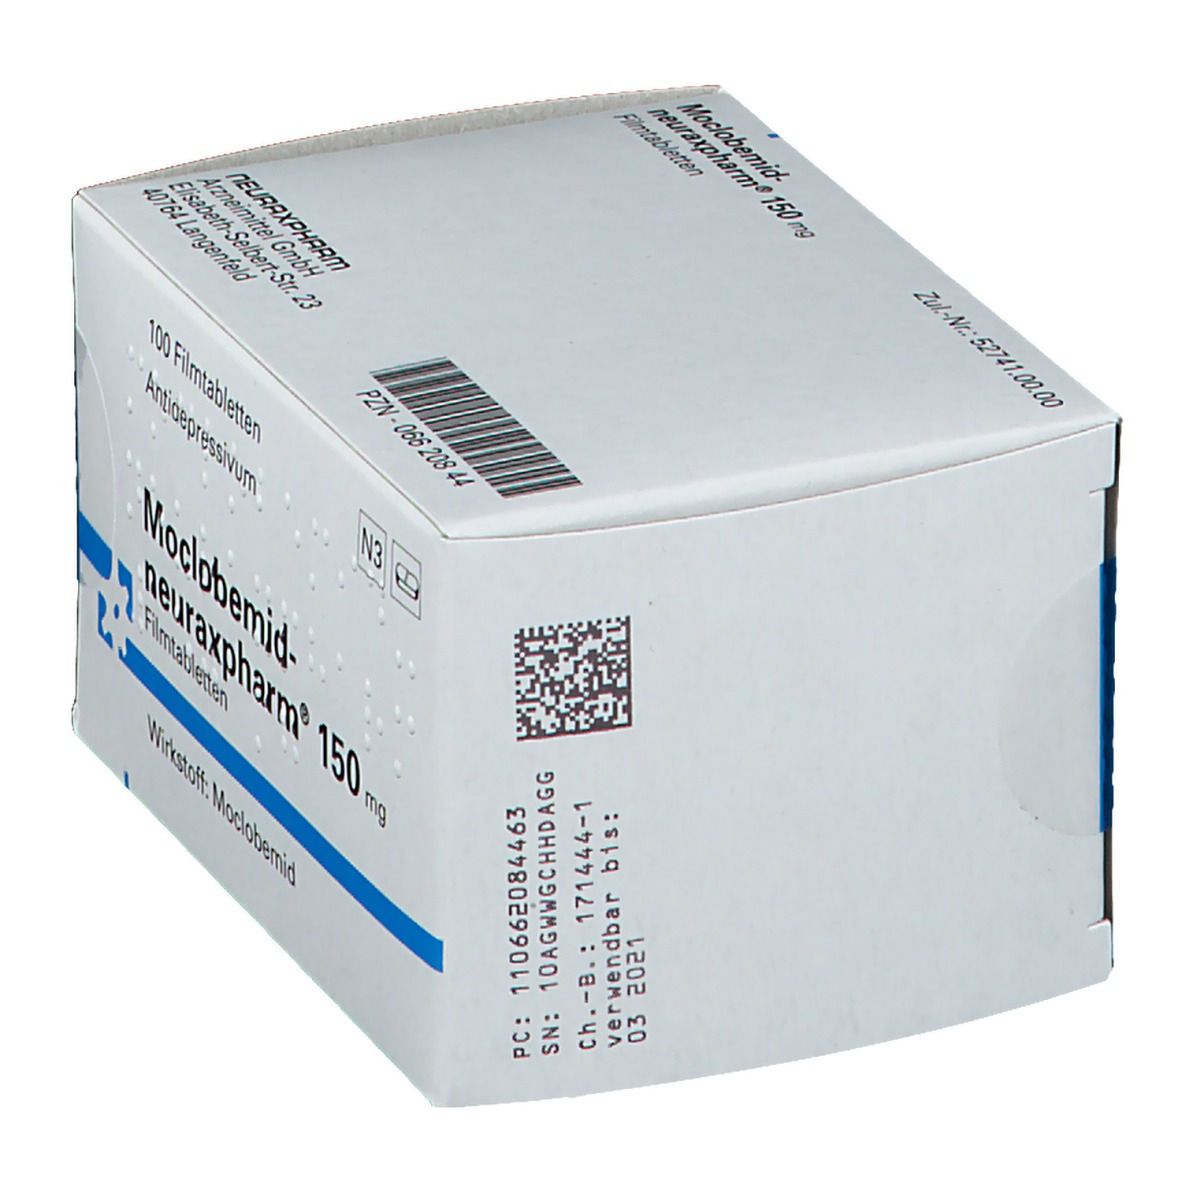 Moclobemid-neuraxpharm® 150 mg